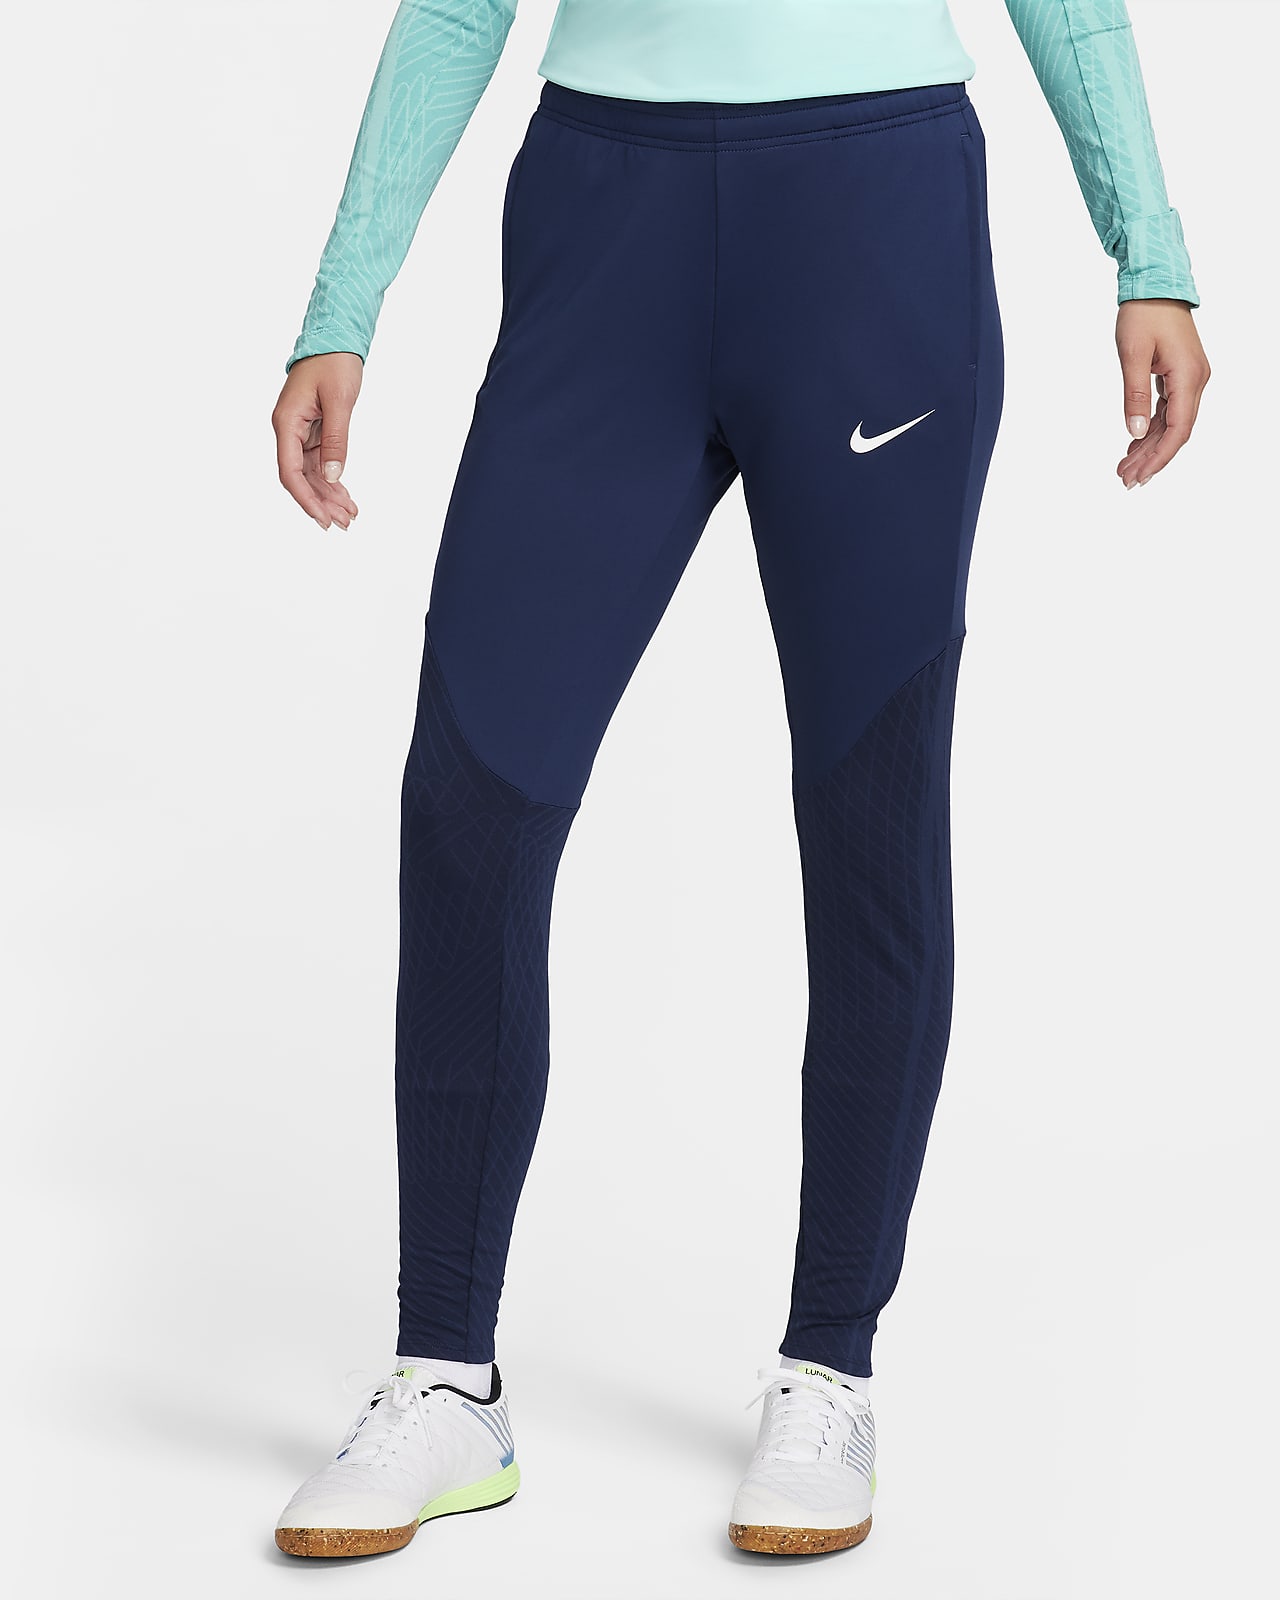 Pants de fútbol para mujer Nike Dri-FIT Strike